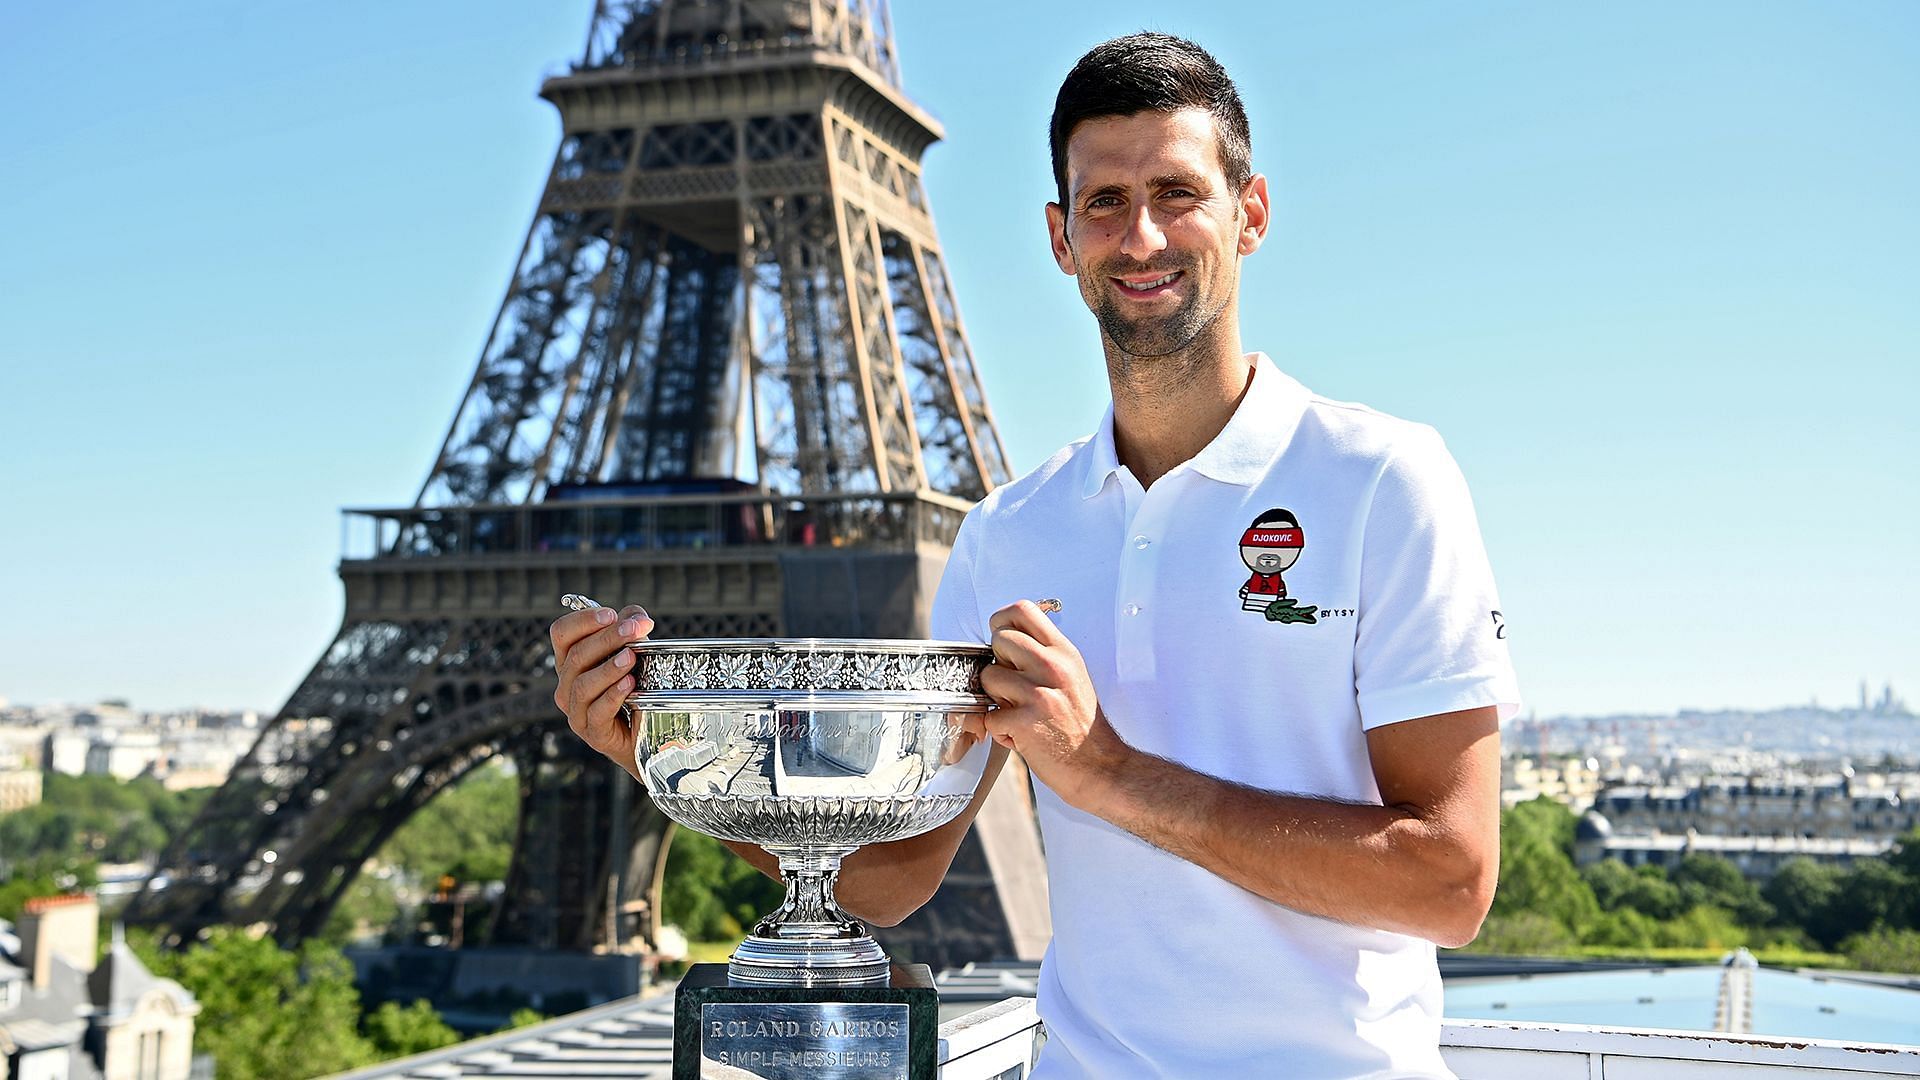 Novak Djokovic after winning the French Open